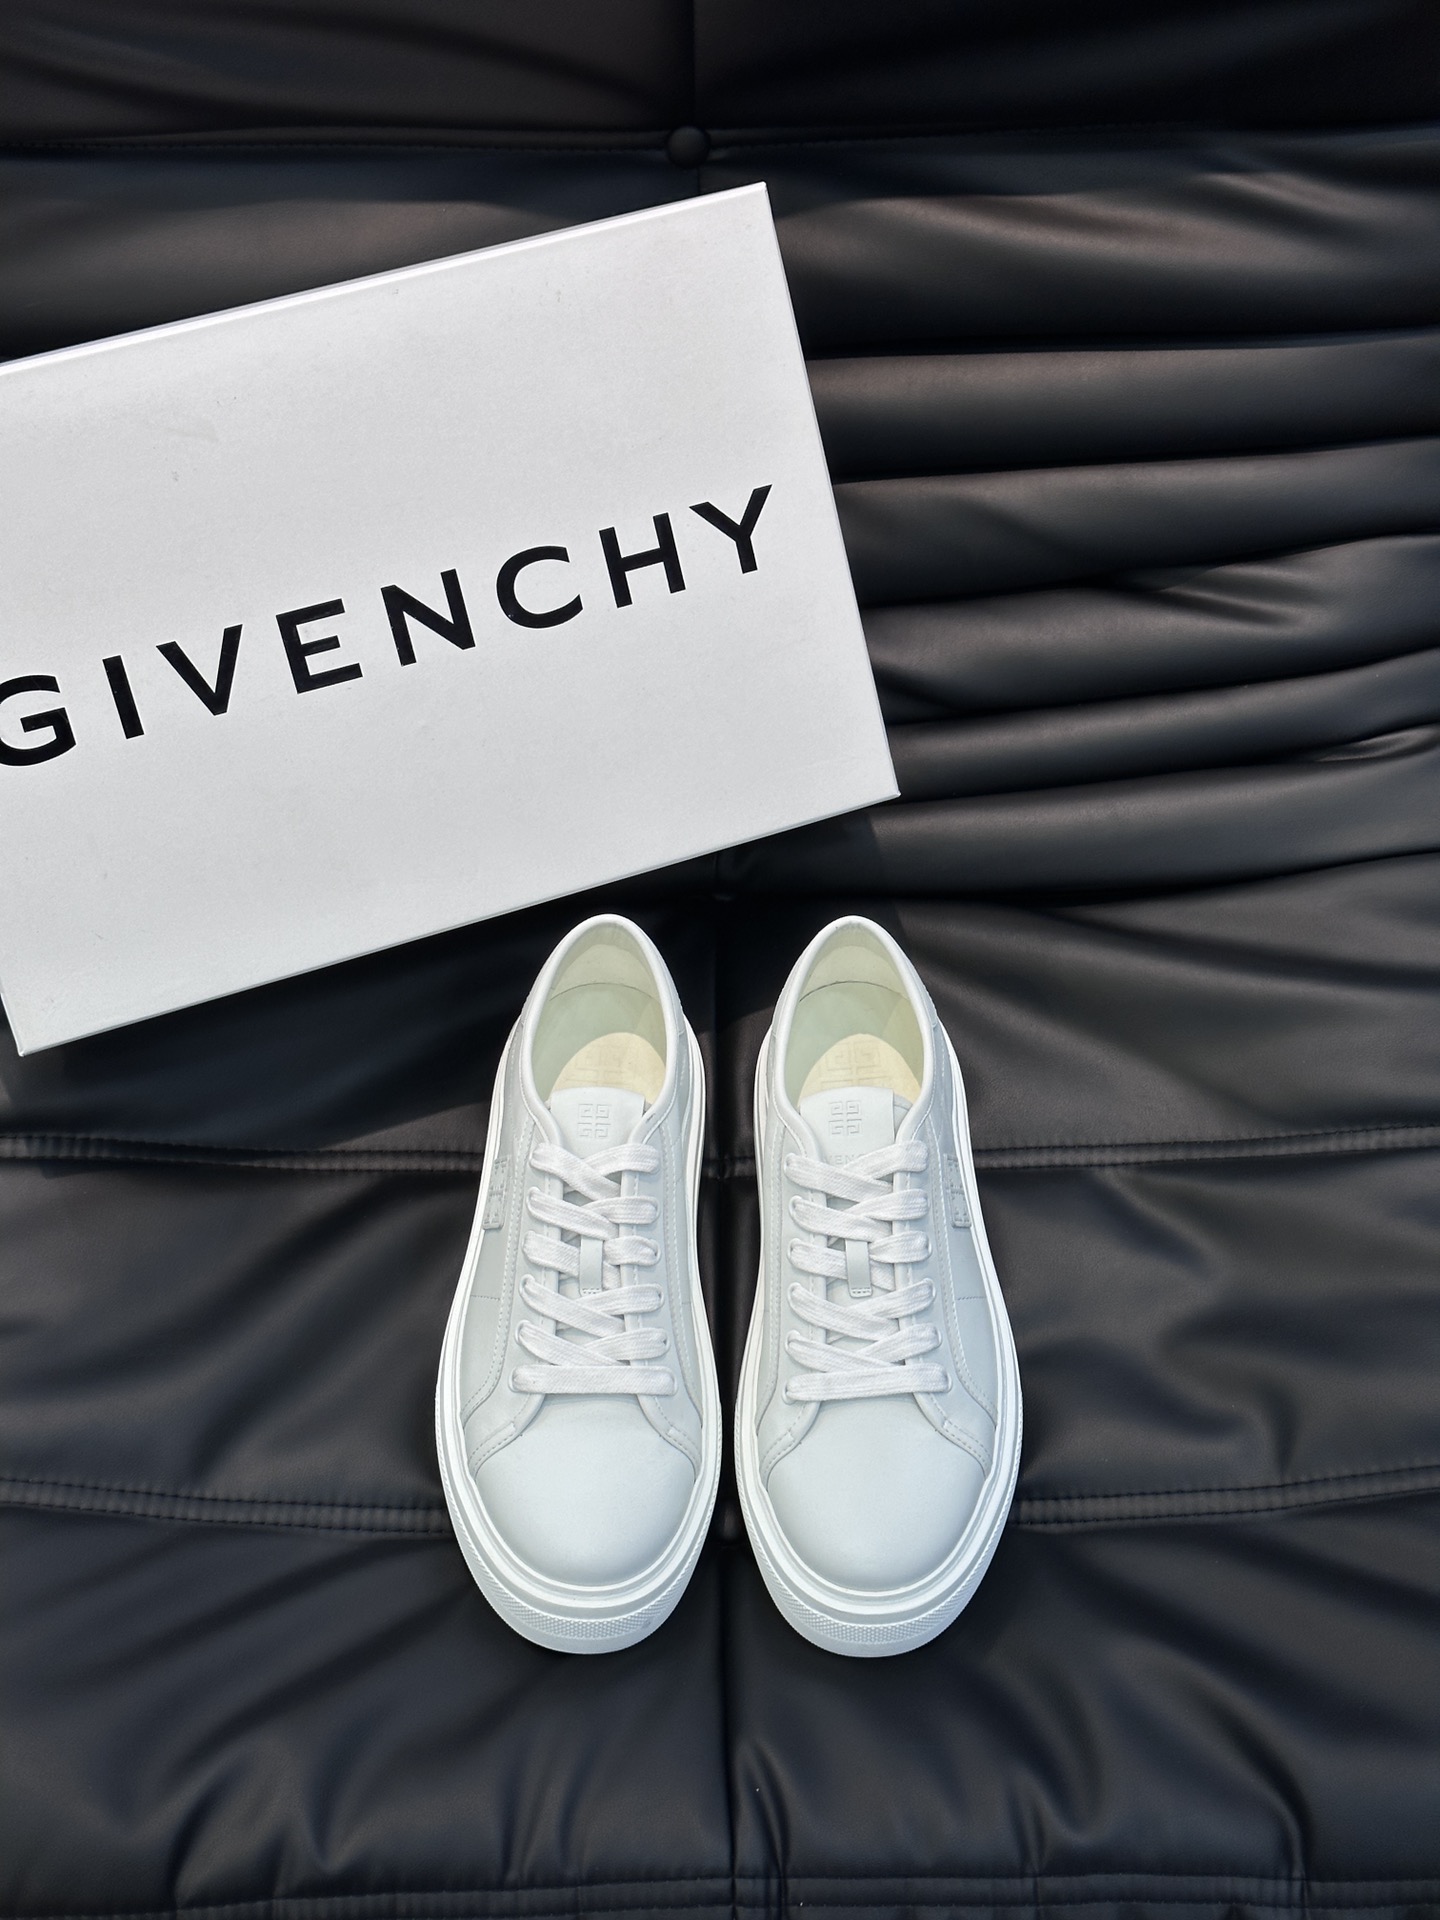 Givench*.纪梵希情侣款厚底休闲鞋采用进口小牛皮打造鞋身饰有真皮品牌标装饰鞋舌真皮logo装饰立体